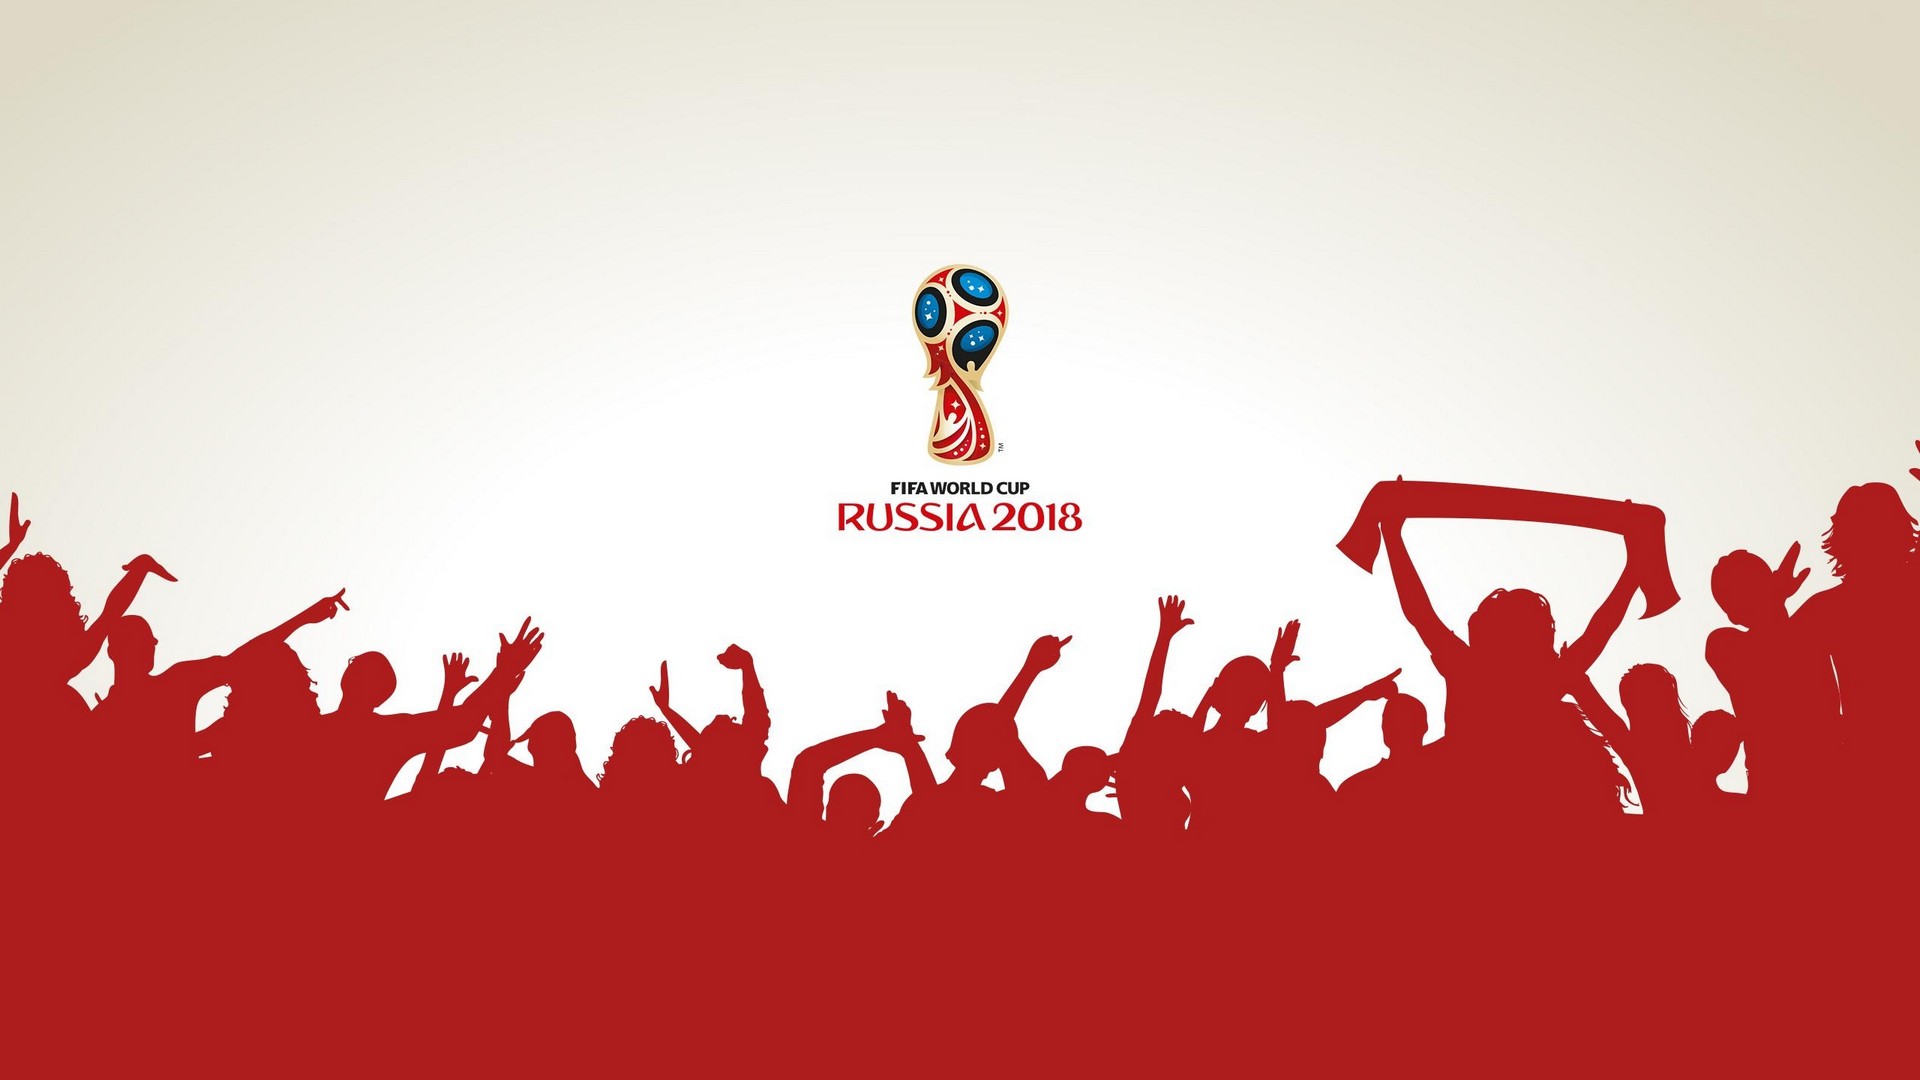 FIFA World Cup Russia 2018 005 Mistrzostwa Swiata w PiLce Noznej Rosja 2018